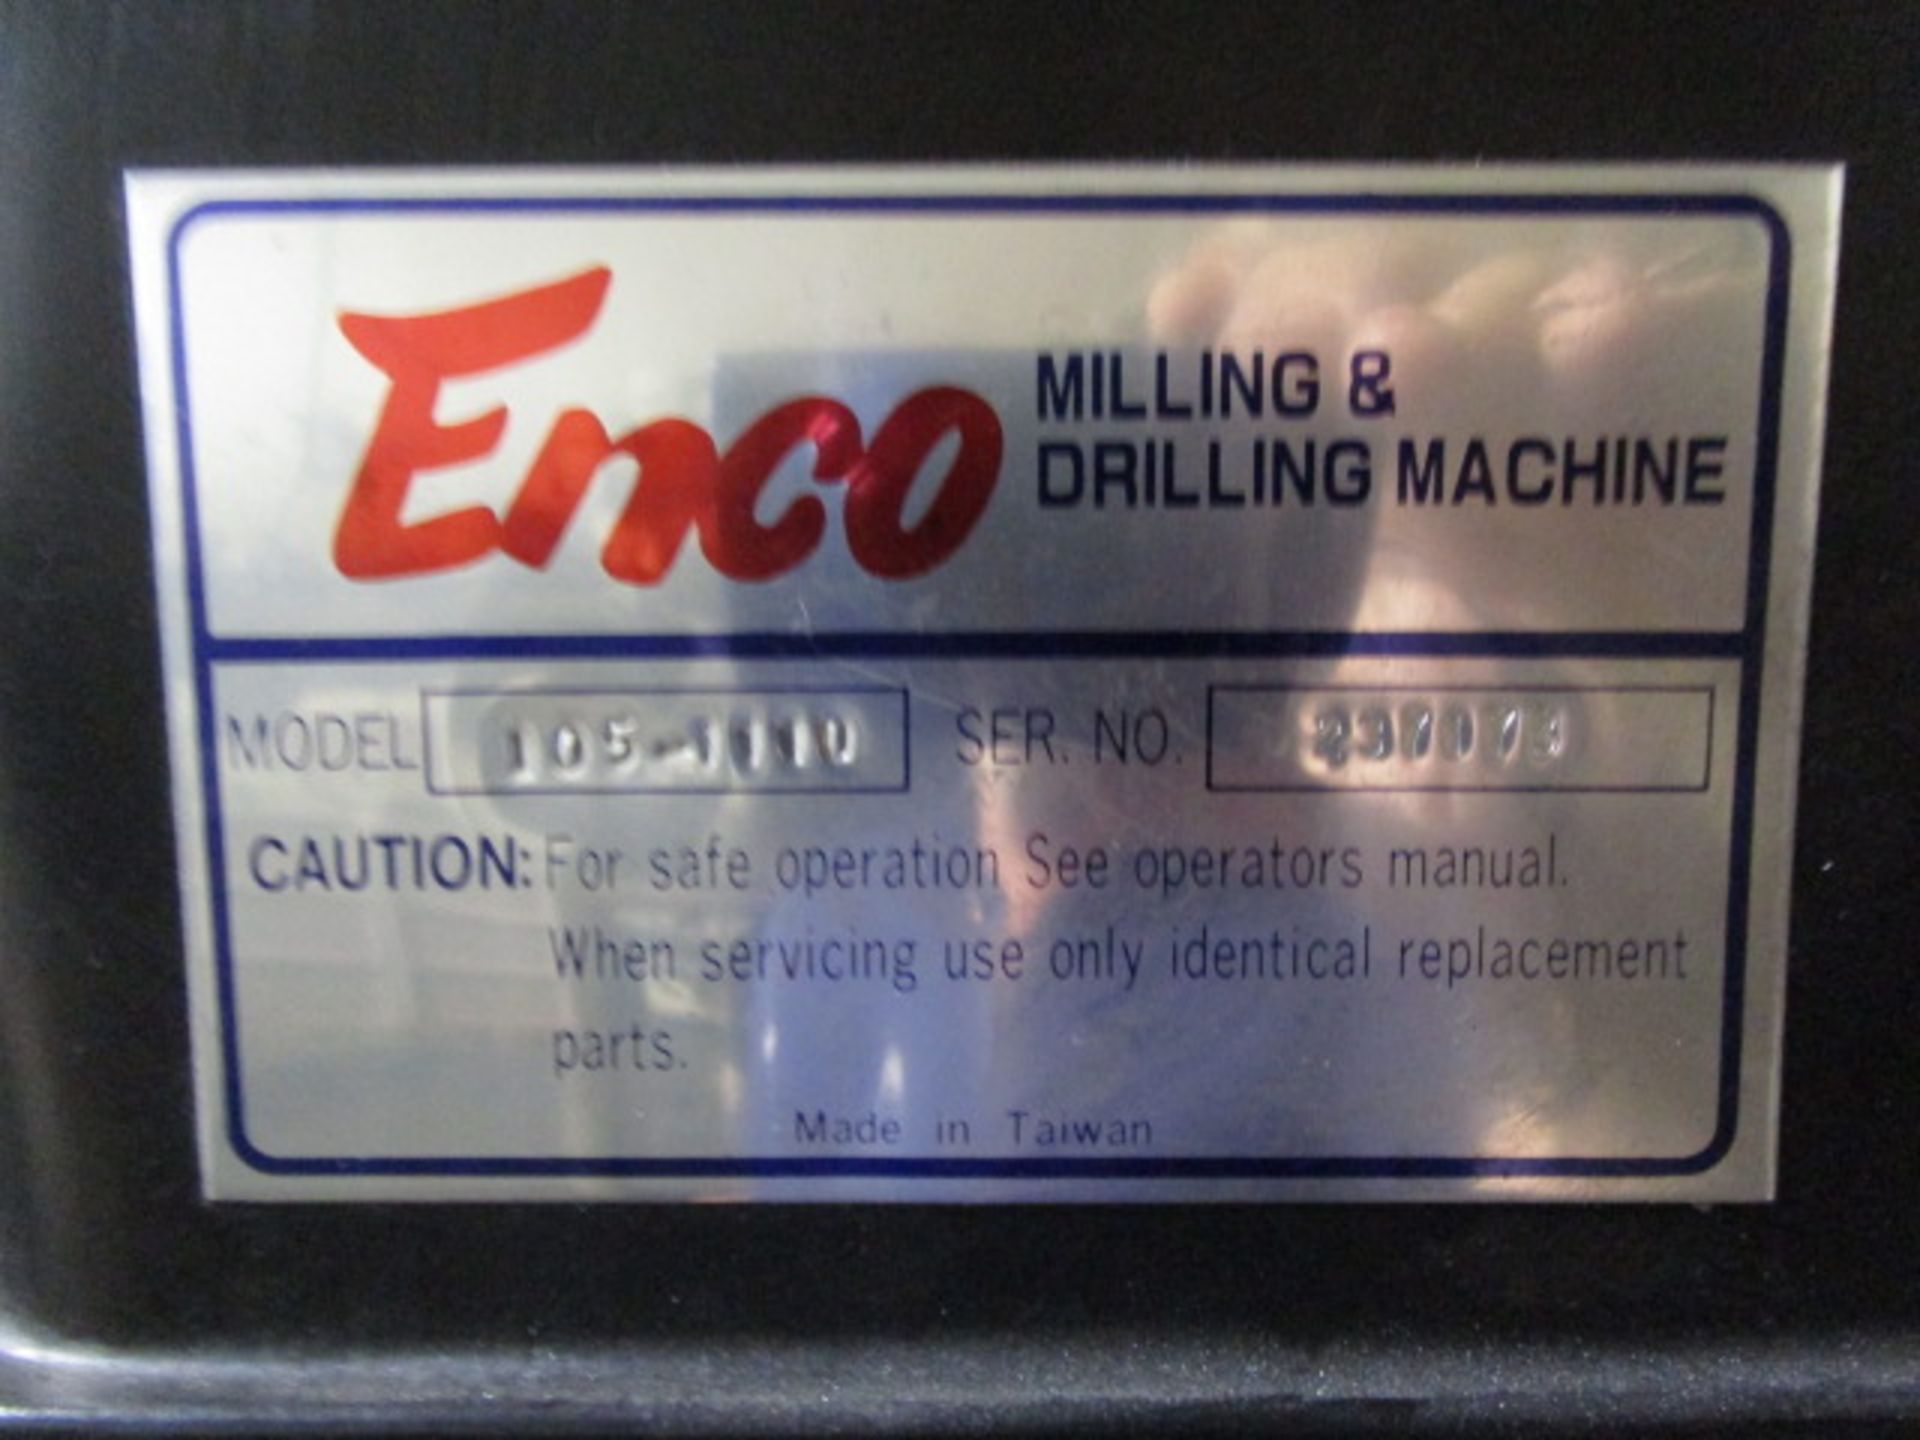 Enco Milling & Drilling Machine, Model 105-1110, Serial Number 237173 - Image 3 of 6